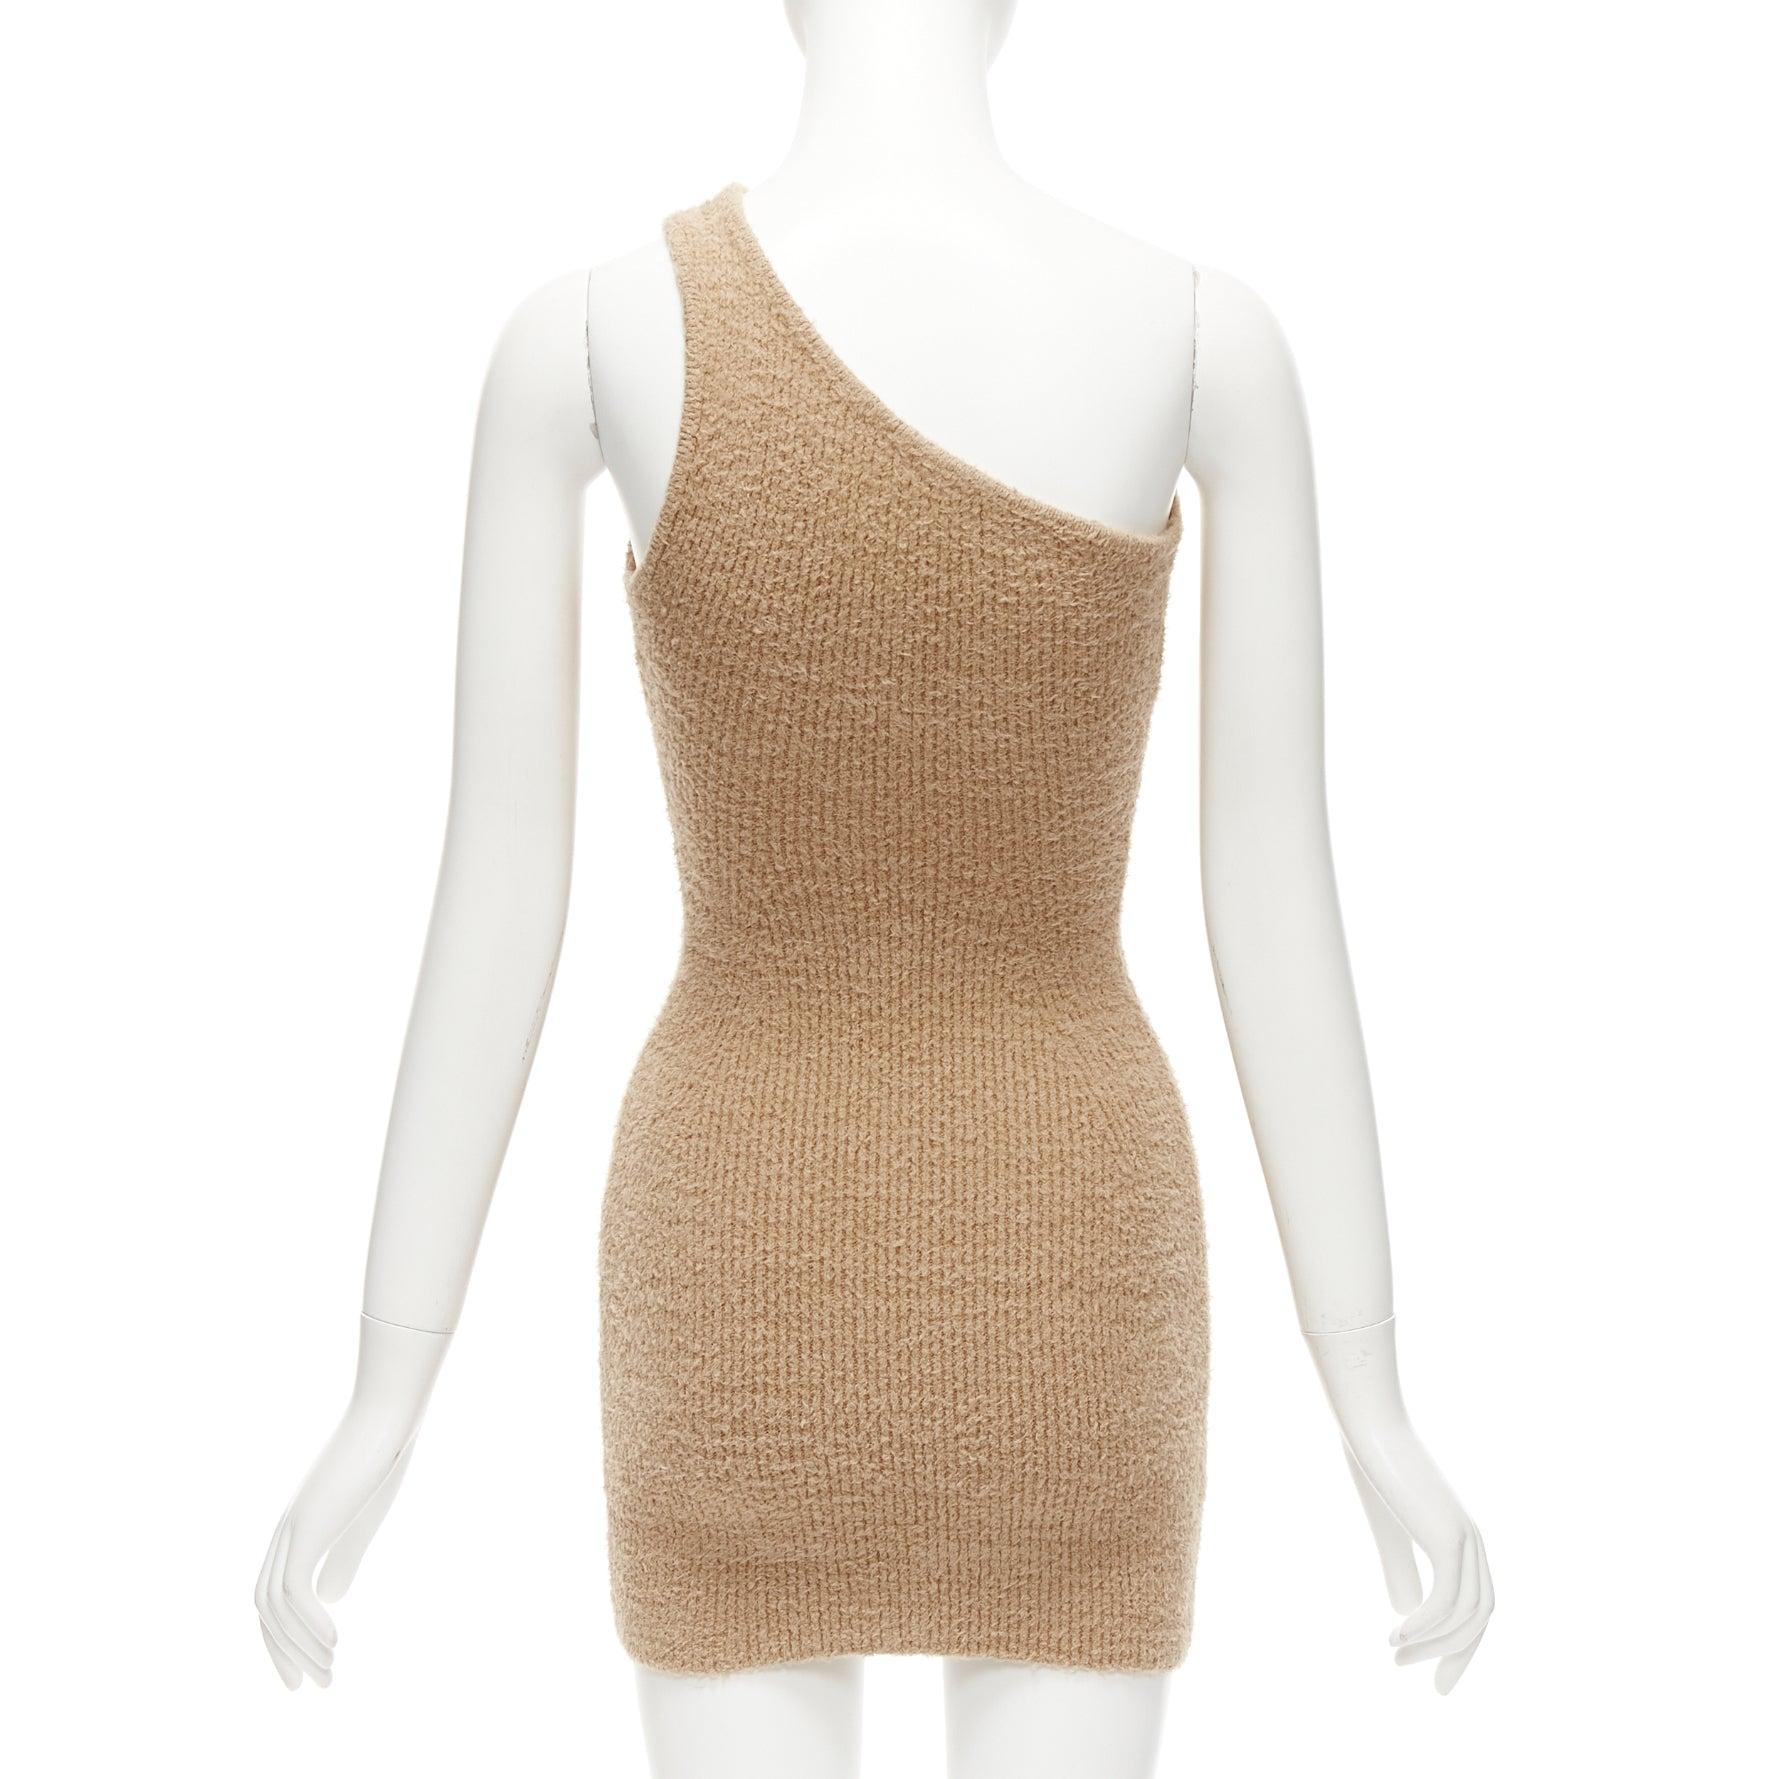 WARDROBE NYC HAILEY BIEBER HB tan fuzzy knit cotton one shoulder mini dress S For Sale 1